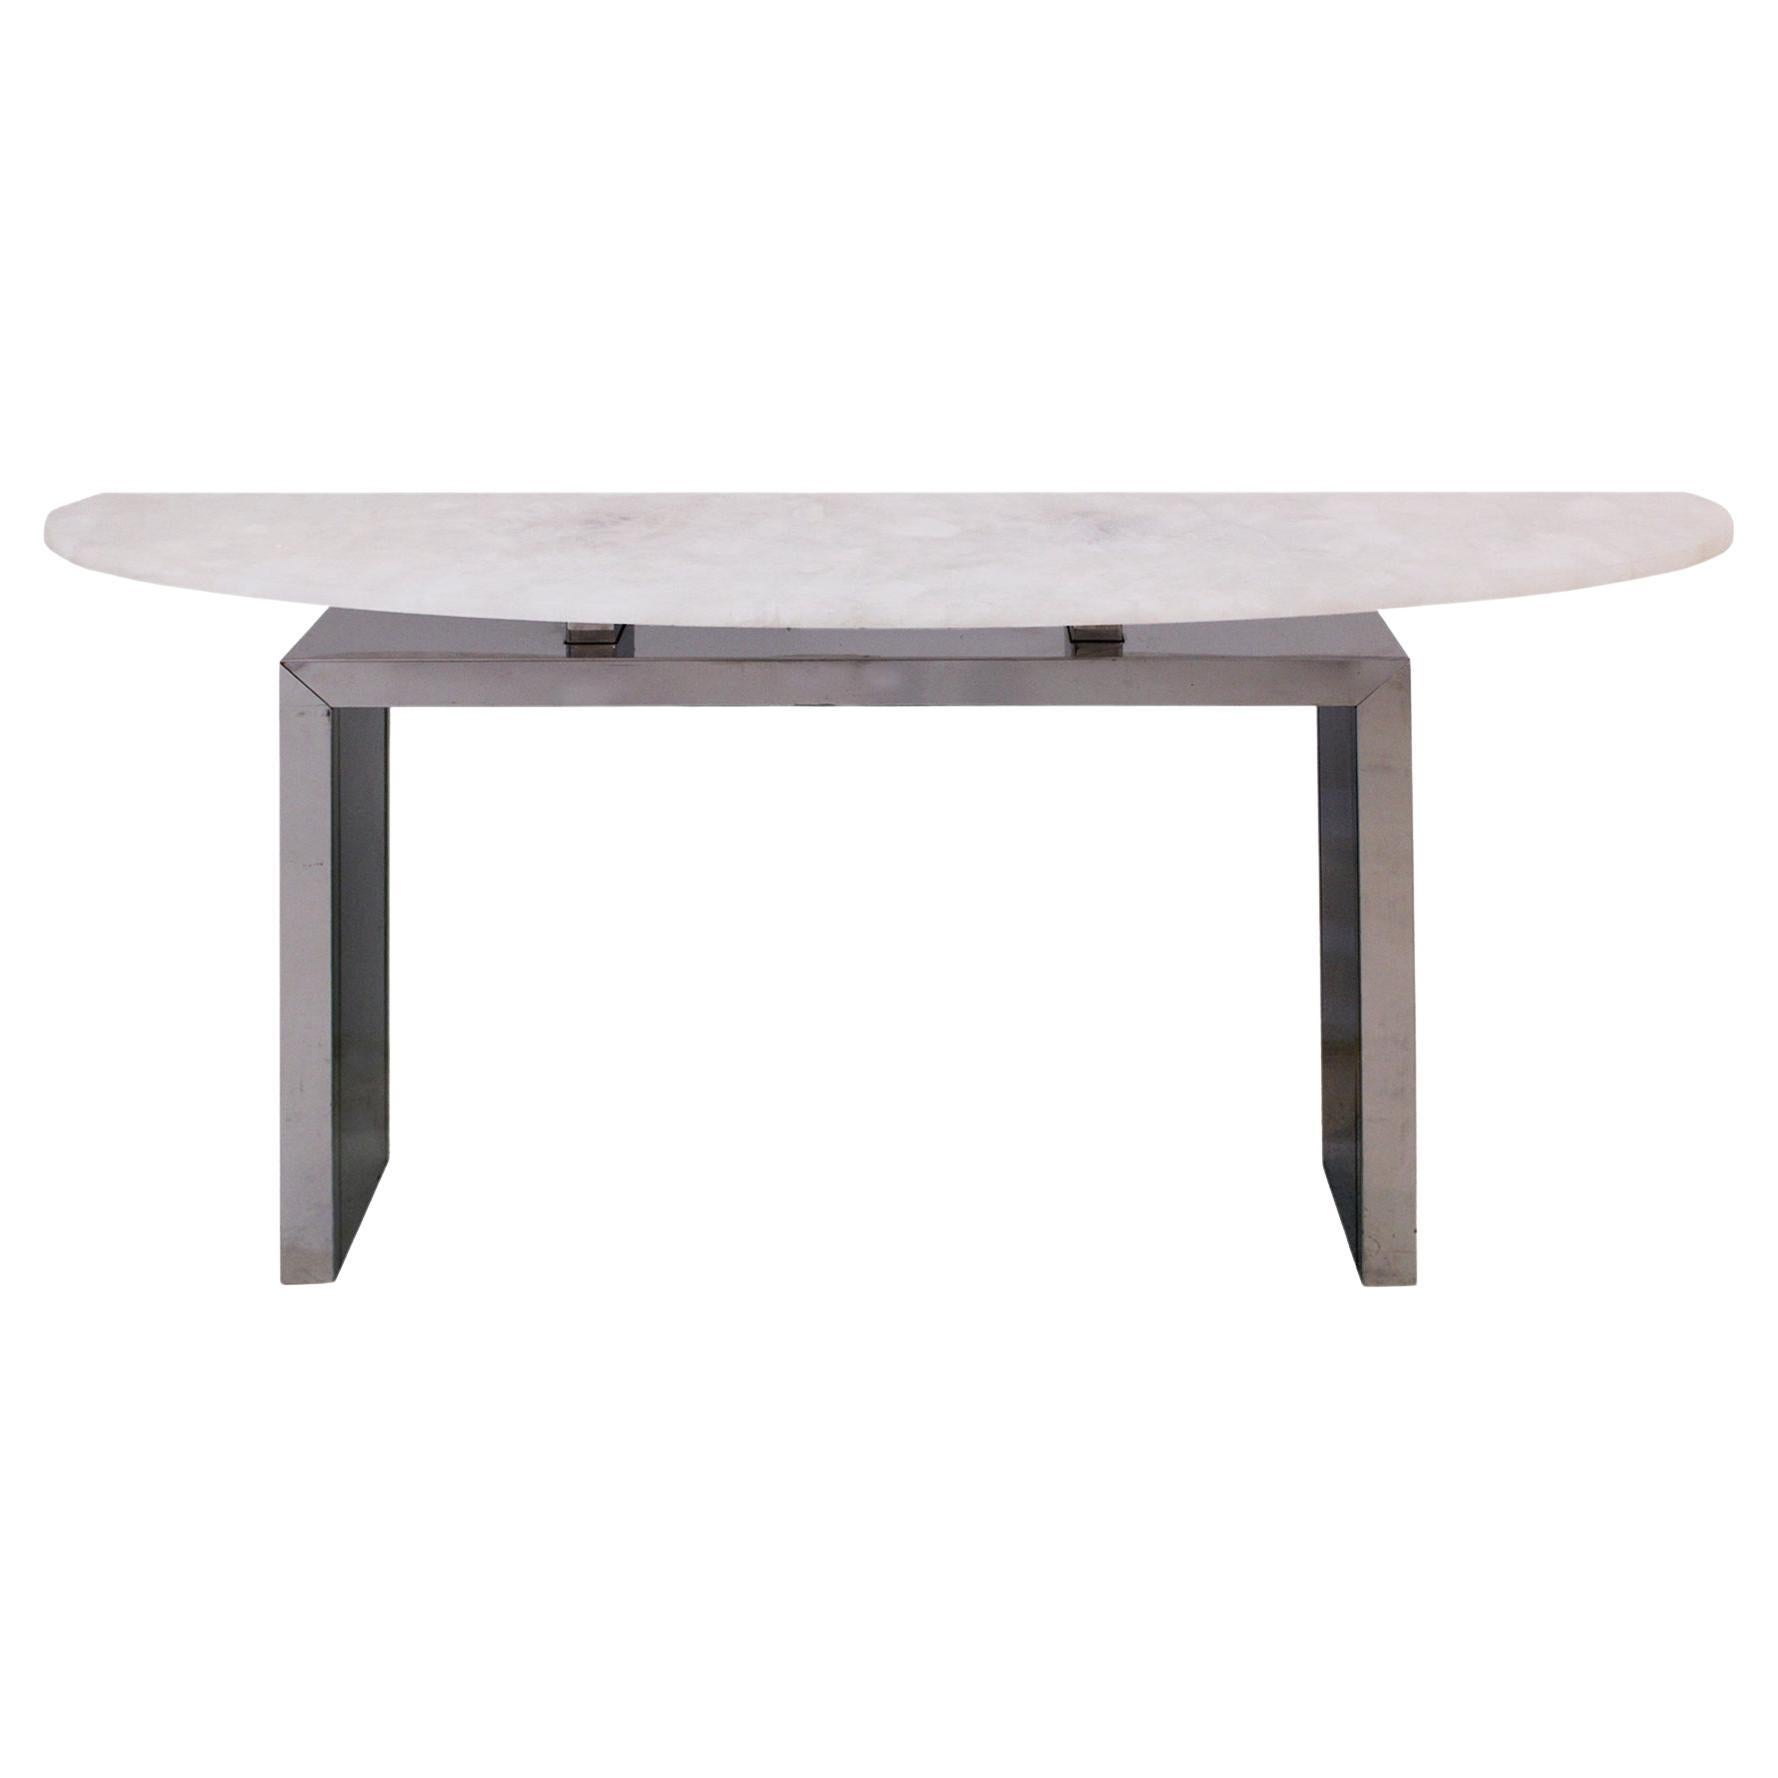 Contemporary Italian Demilune Console Table Made of White Quartz and Steel base